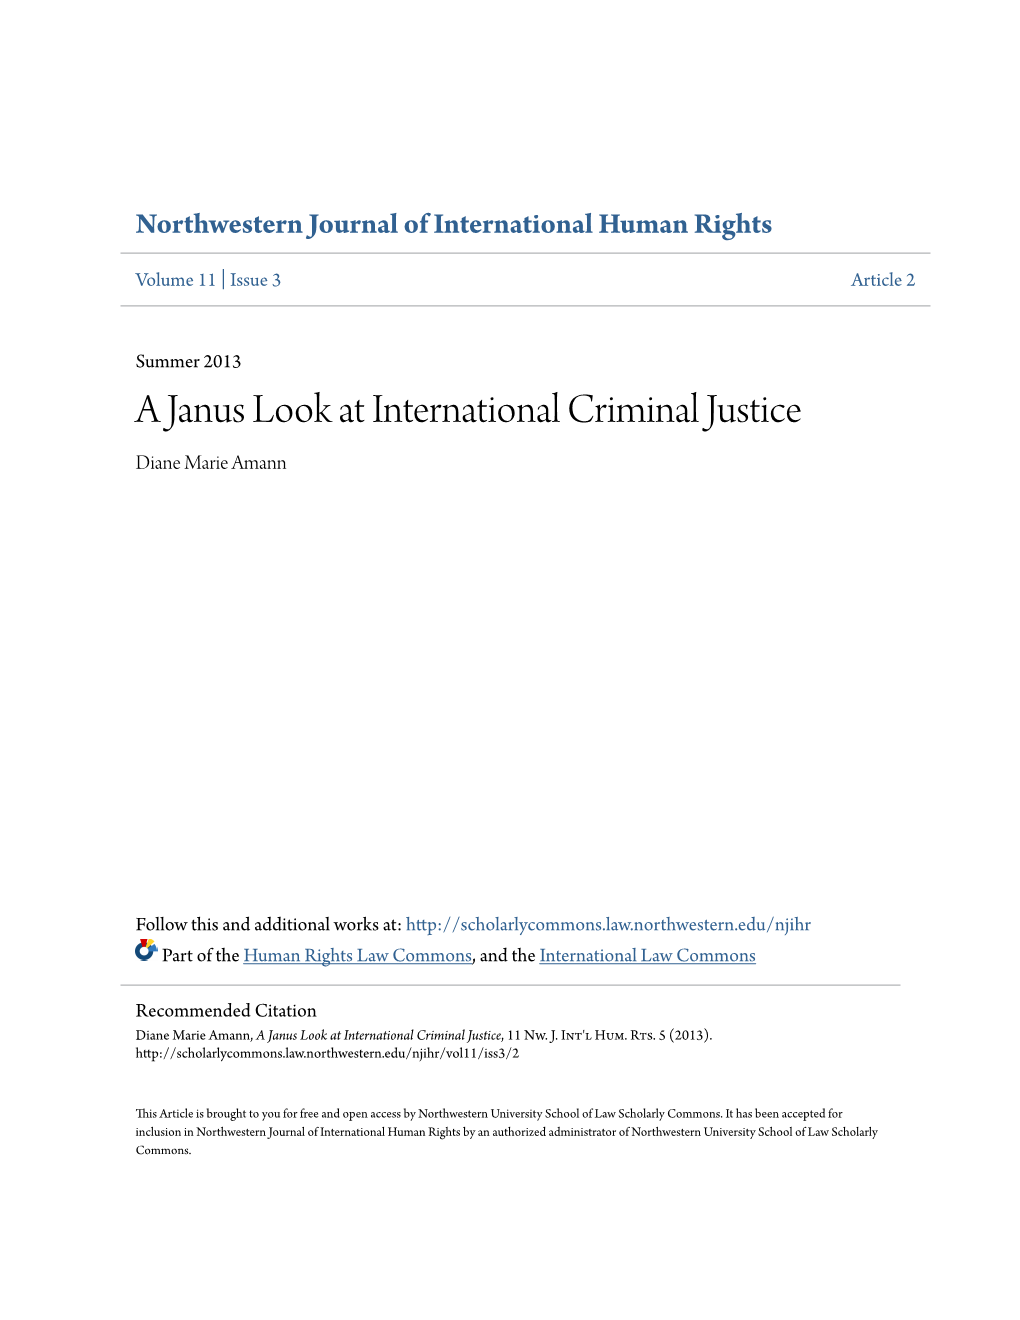 A Janus Look at International Criminal Justice Diane Marie Amann